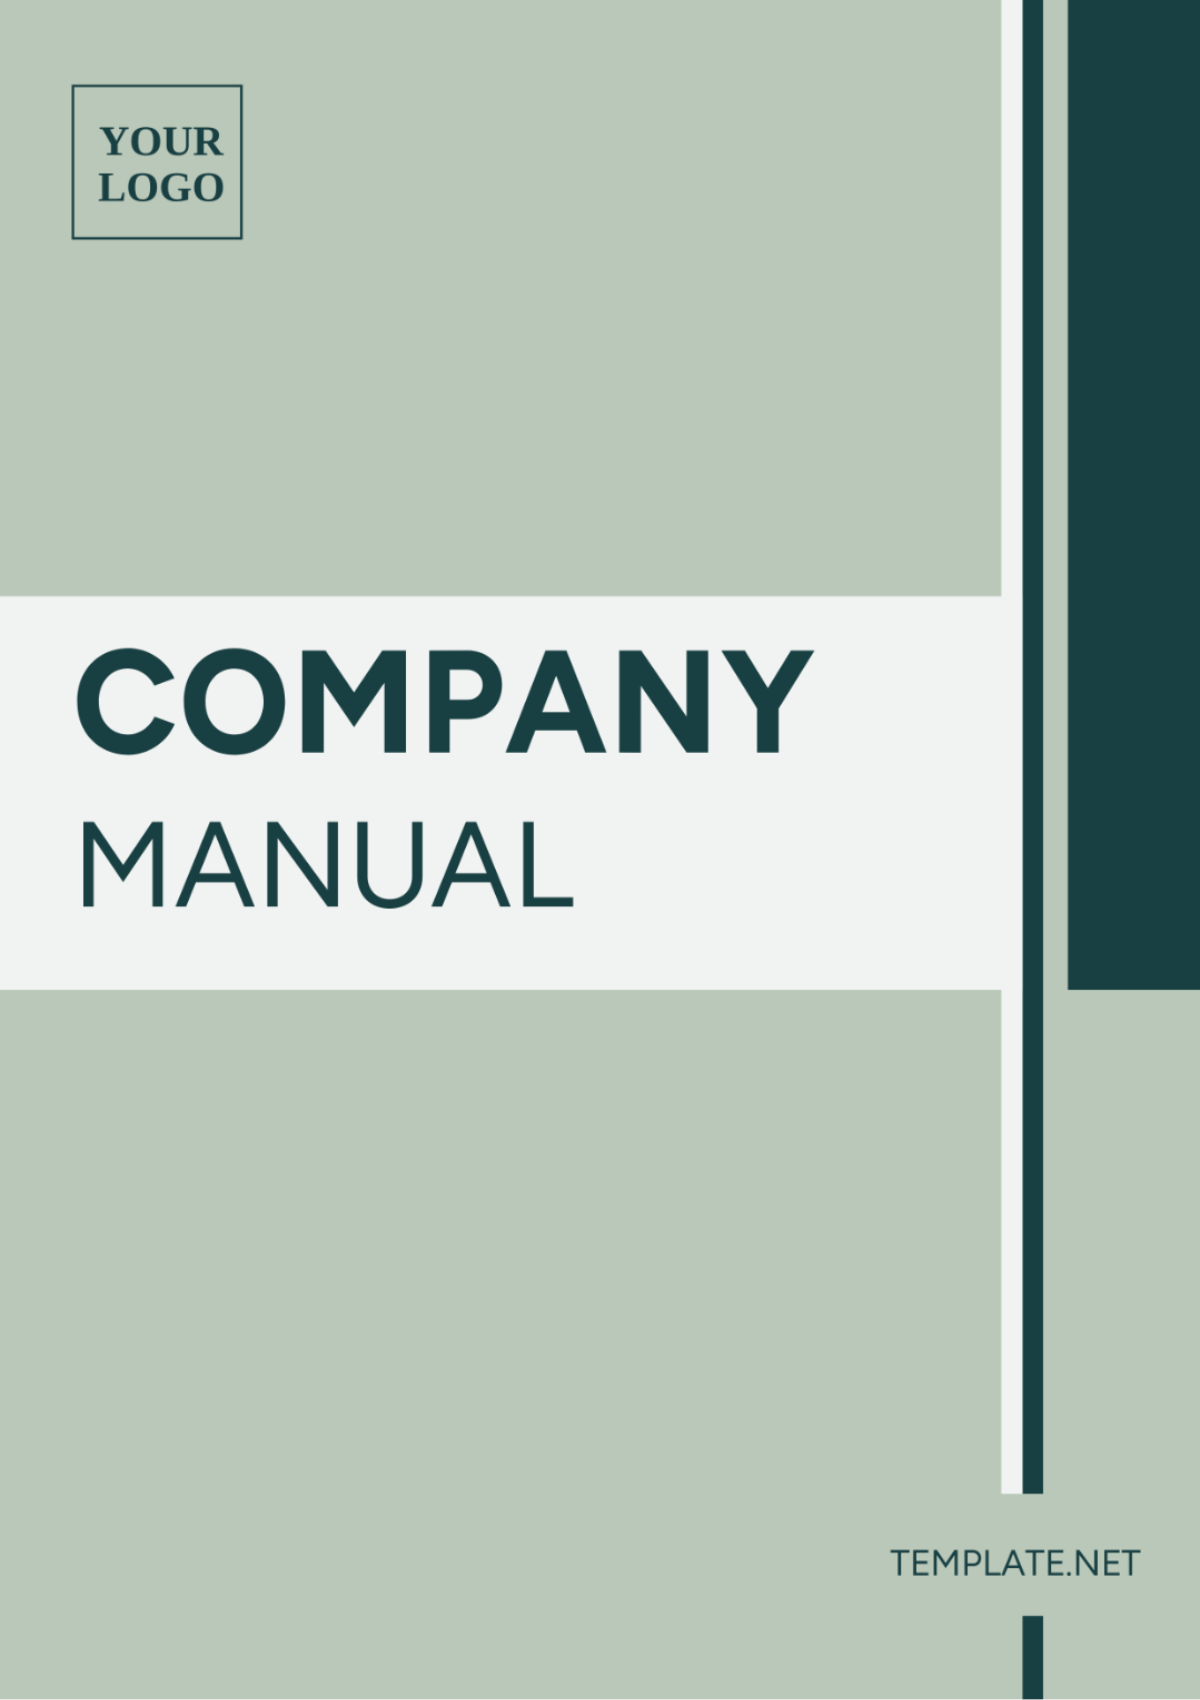 Company Manual Template